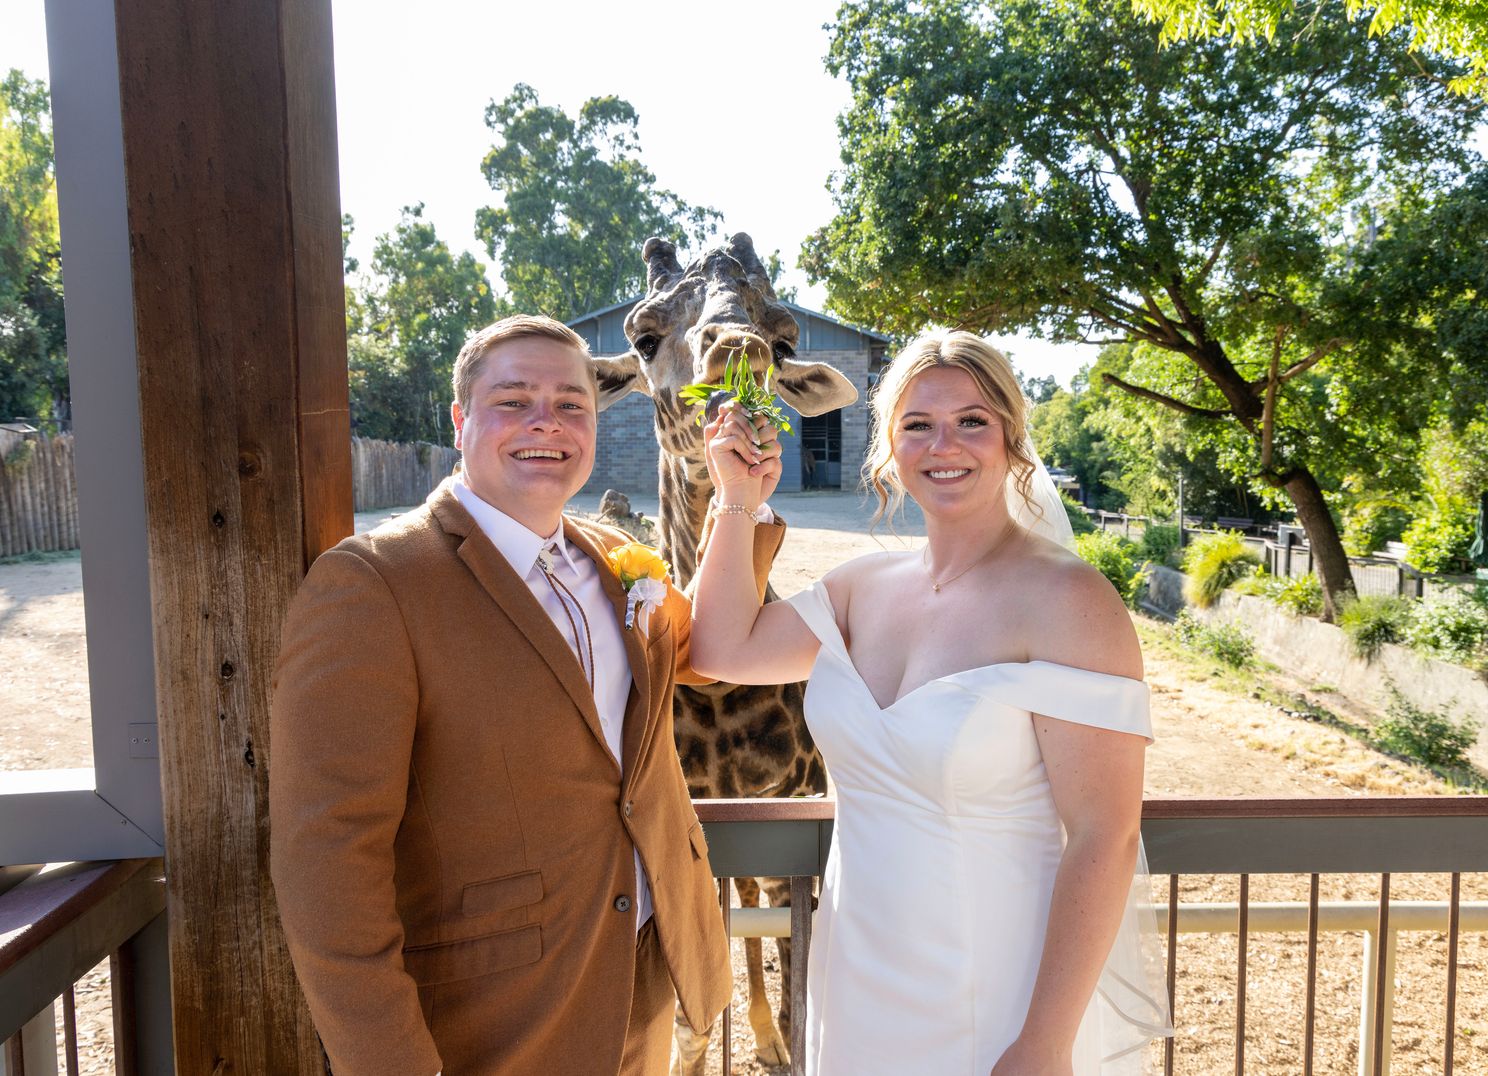 Sacramento Zoo Wedding. Couple feeding Giraffe in the middle of the wedding photoshoot.